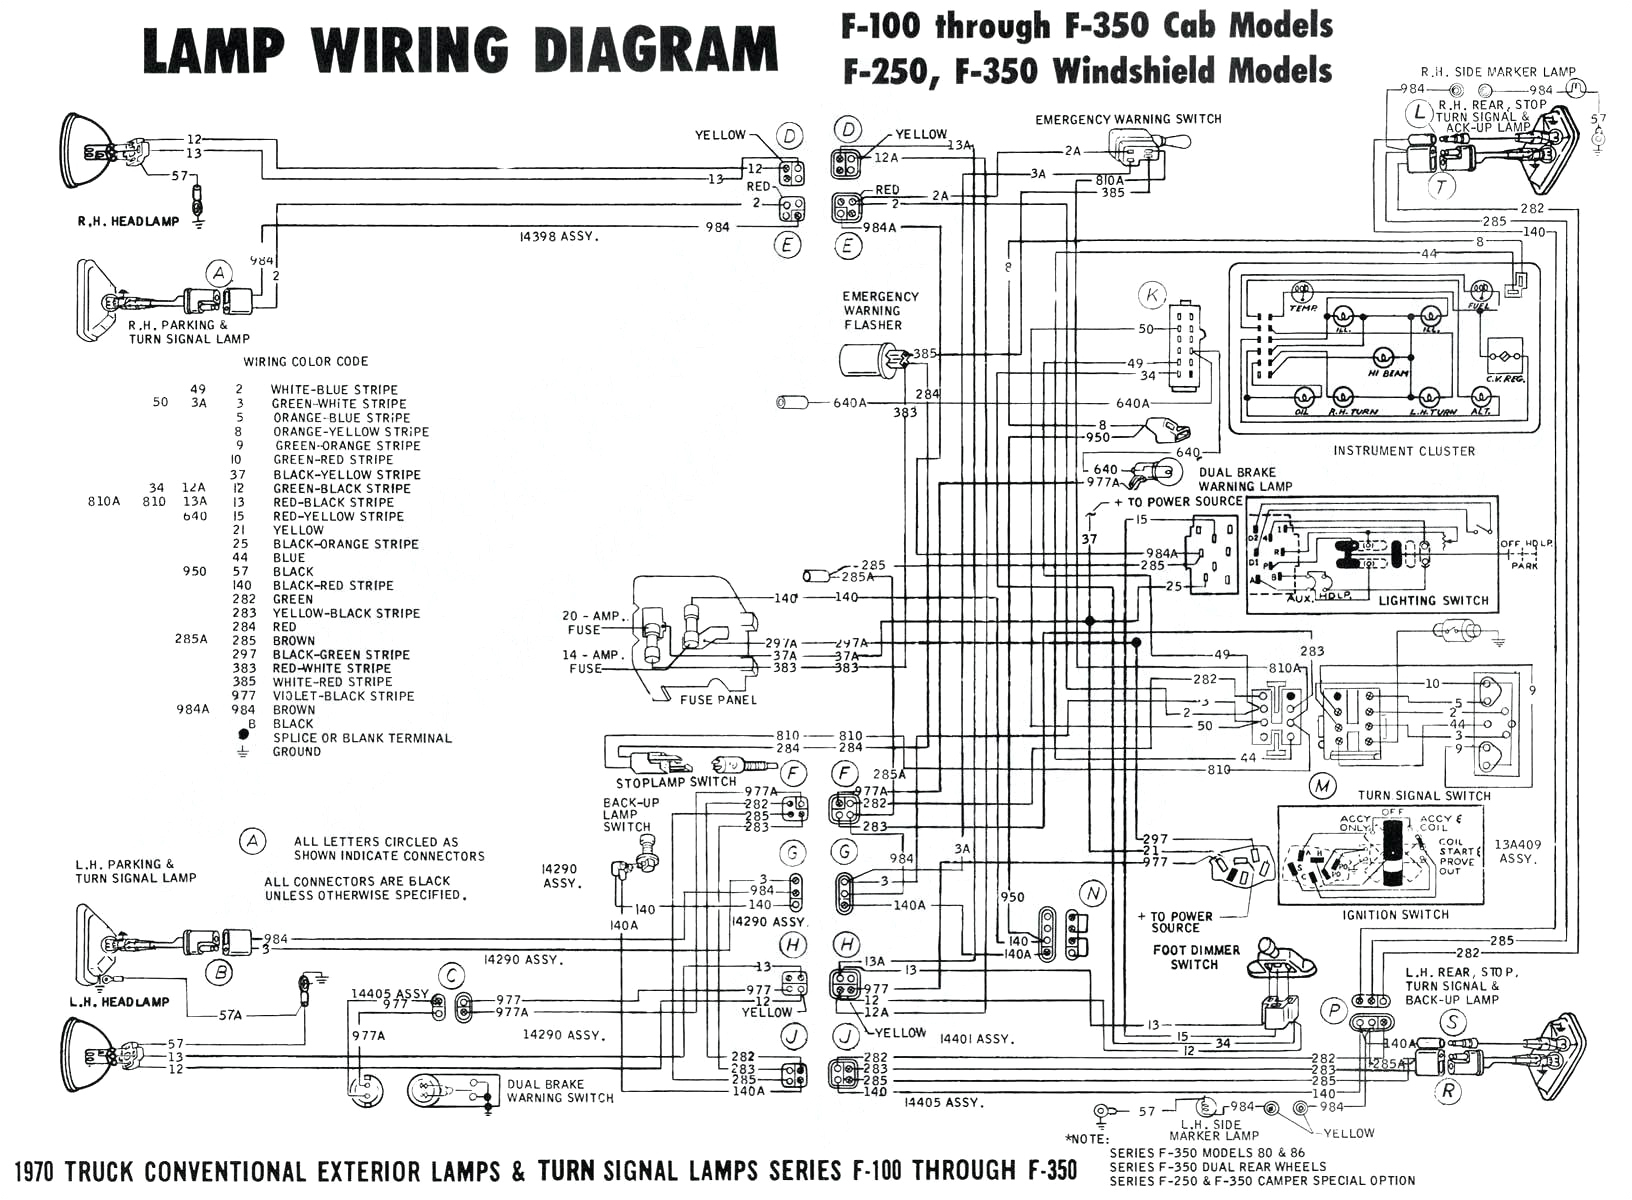 chaparral wiring diagram wiring diagrams second 2003 chaparral wiring diagram chaparral wiring diagram